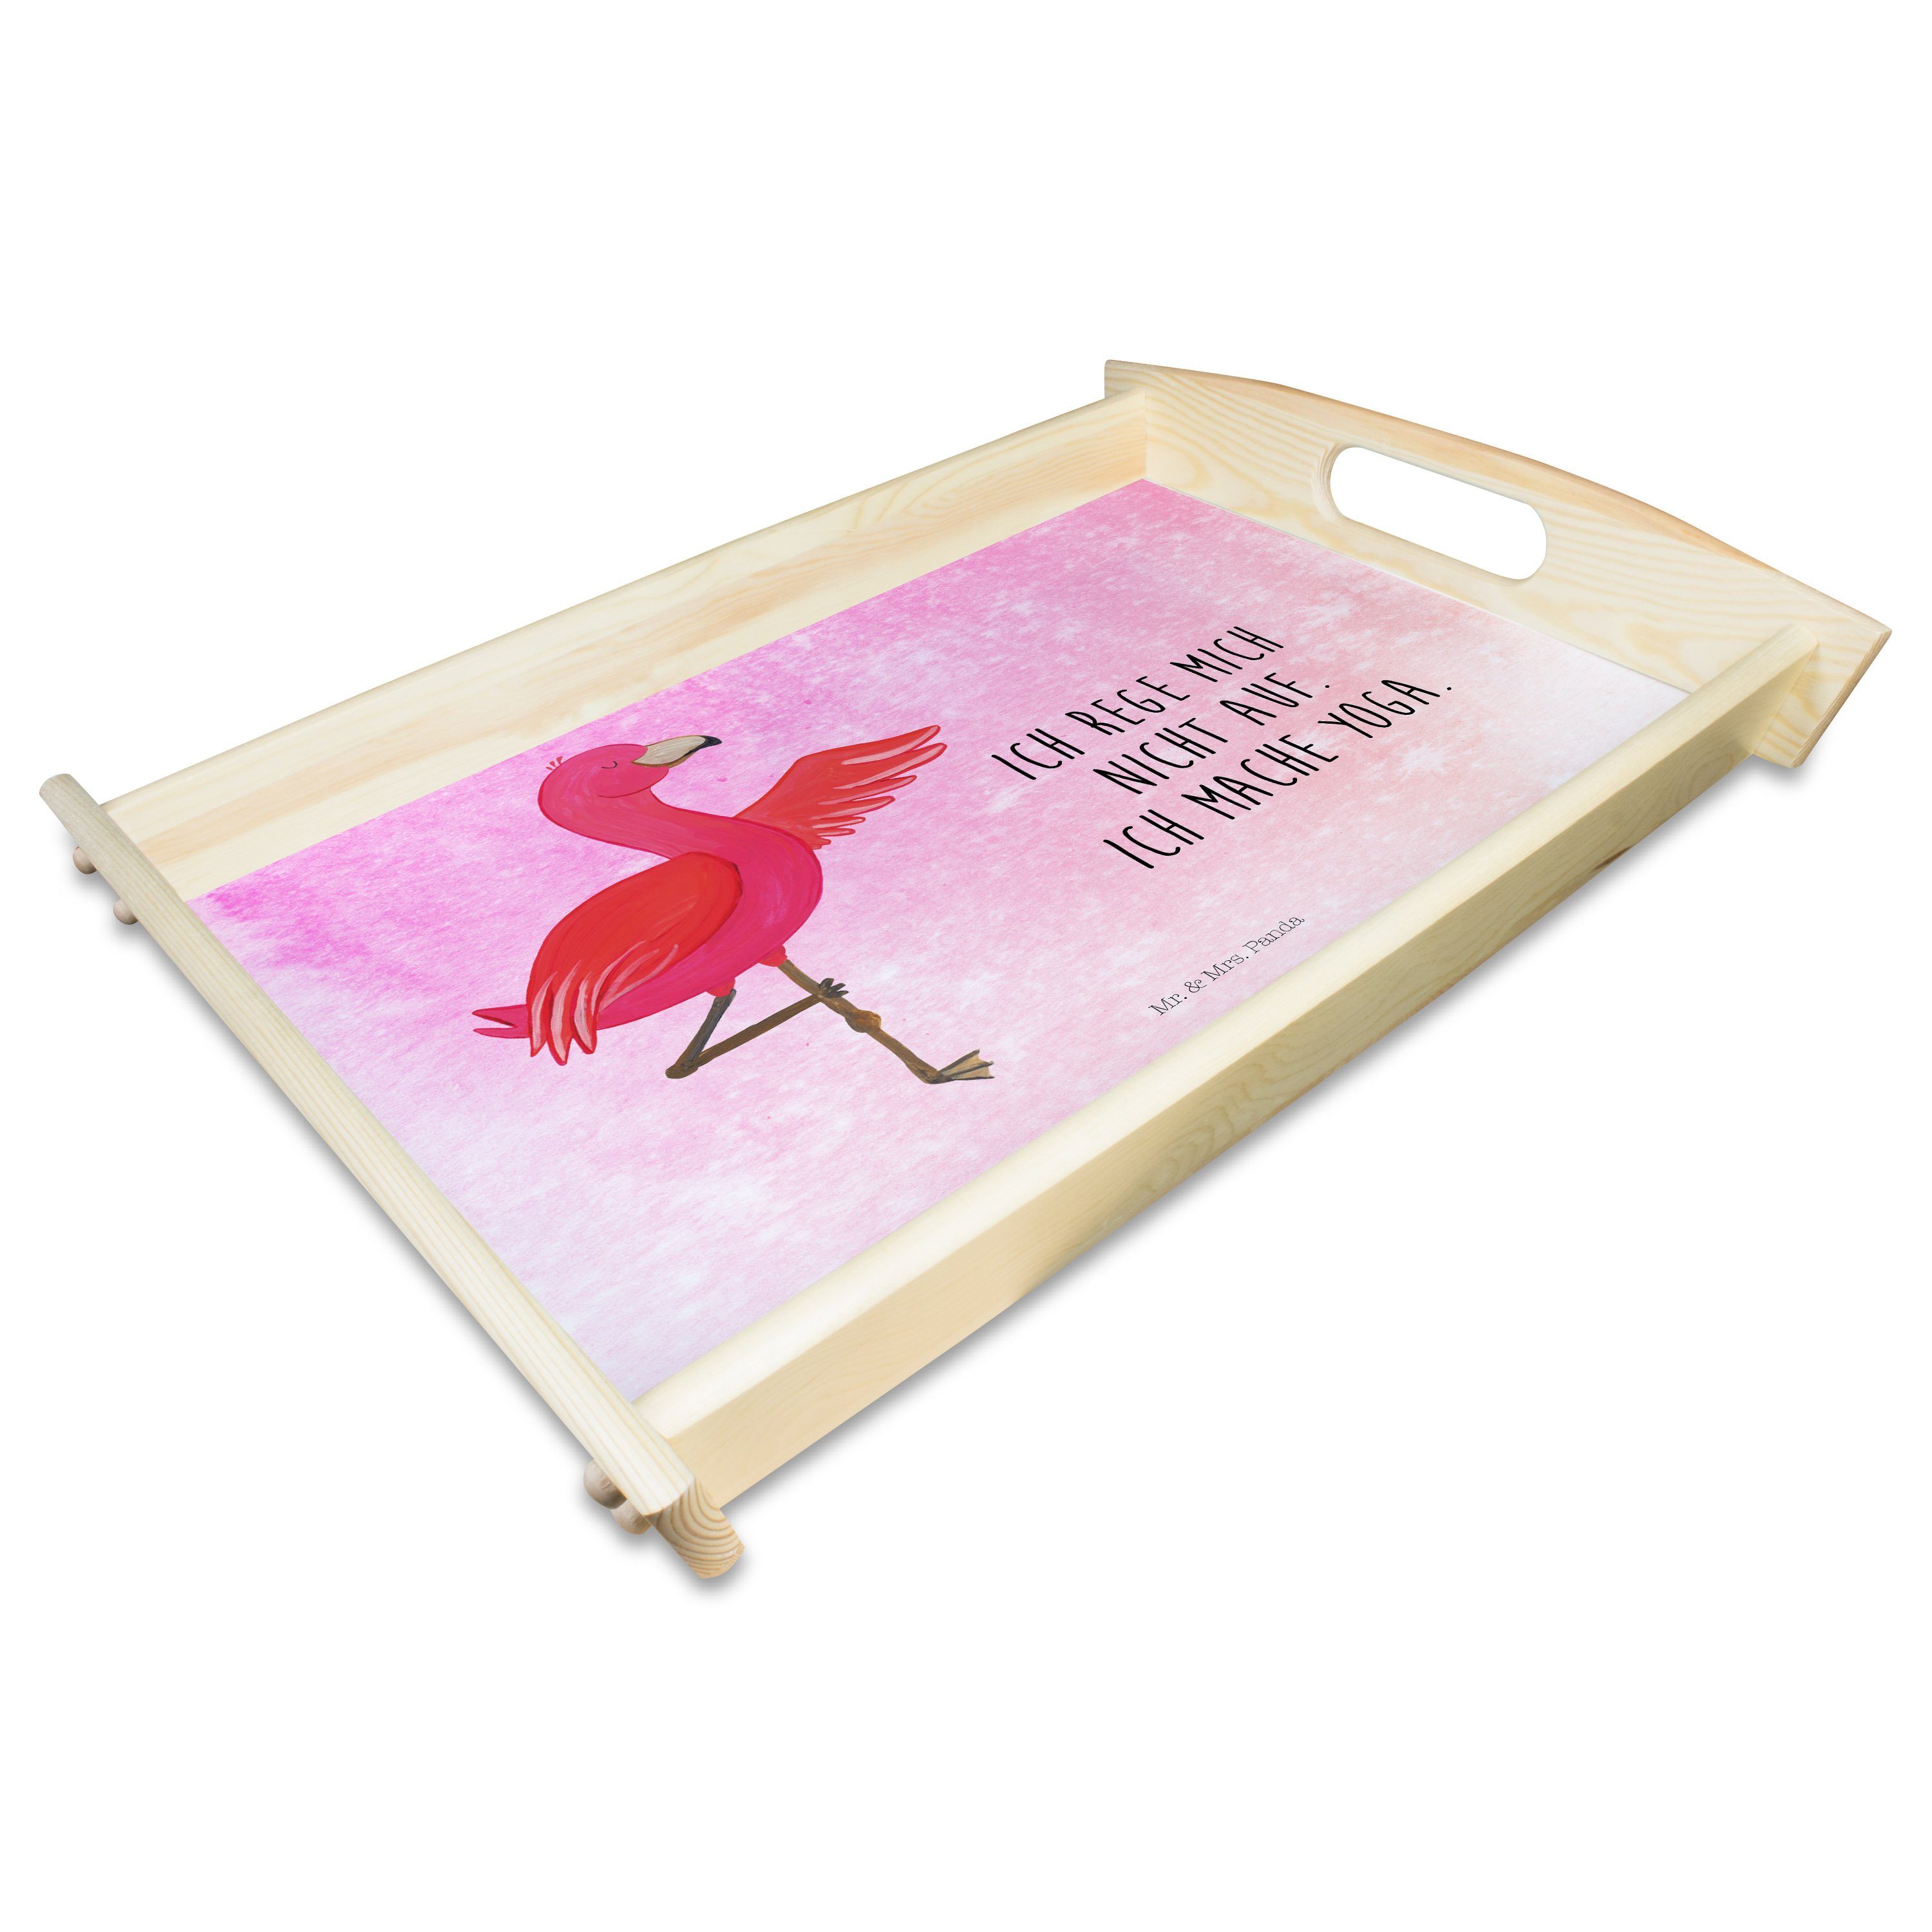 - & Mr. Panda Tablett Flamingo Echtholz Mrs. Acht, Geschenk, Dekotablett, Pink (1-tlg) Aquarell Aufregen, - Yoga lasiert,